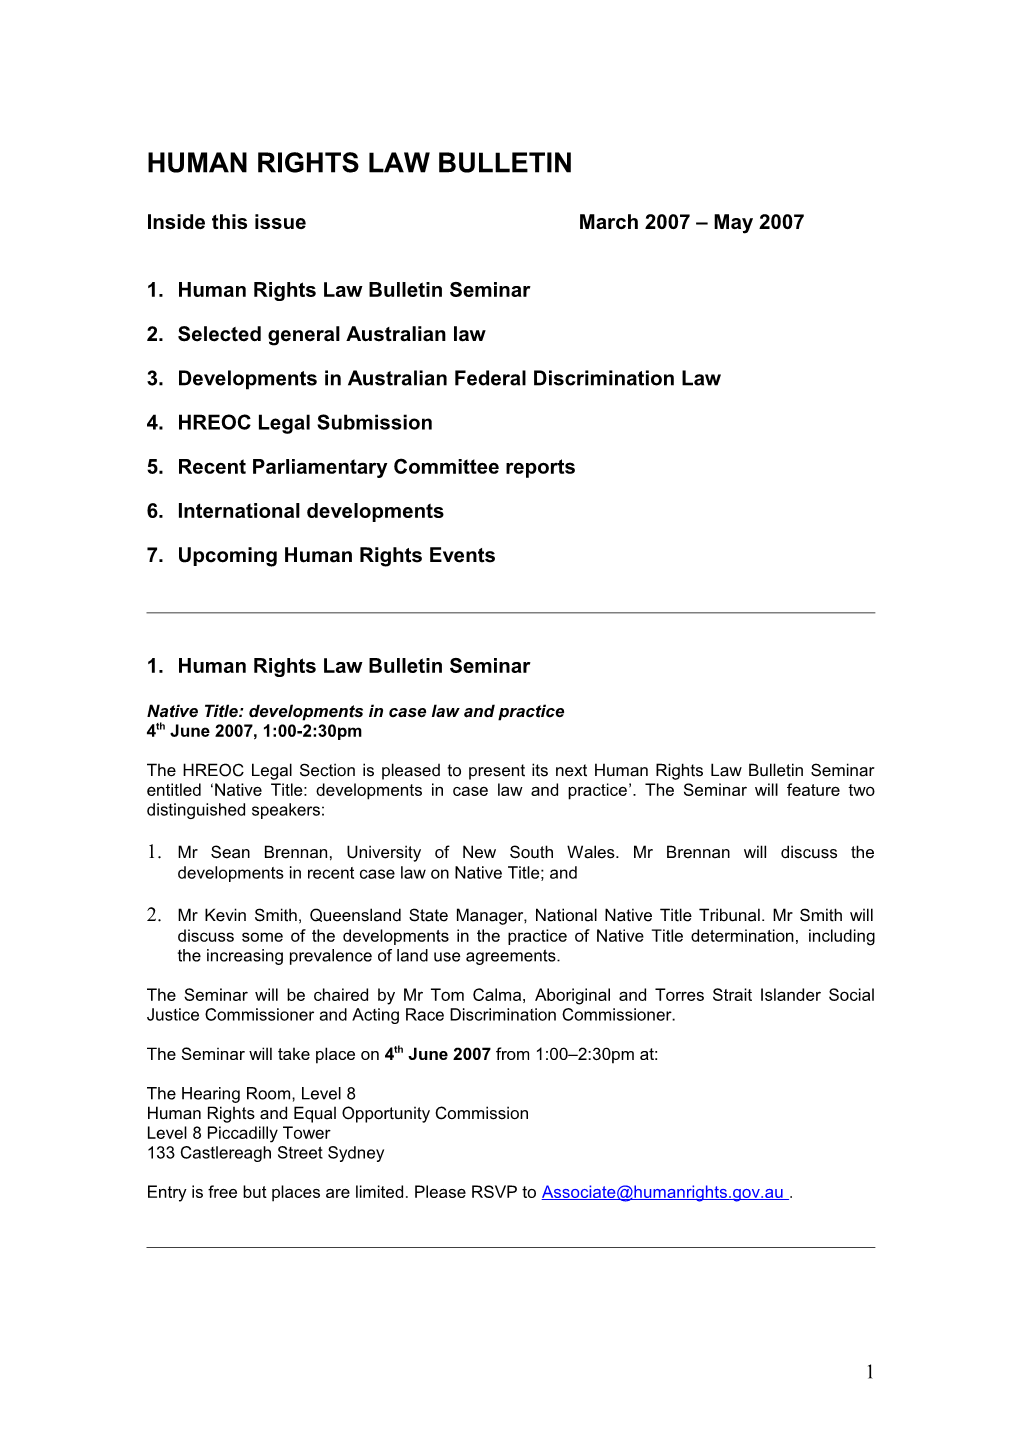 Human Rights Law Bulletin